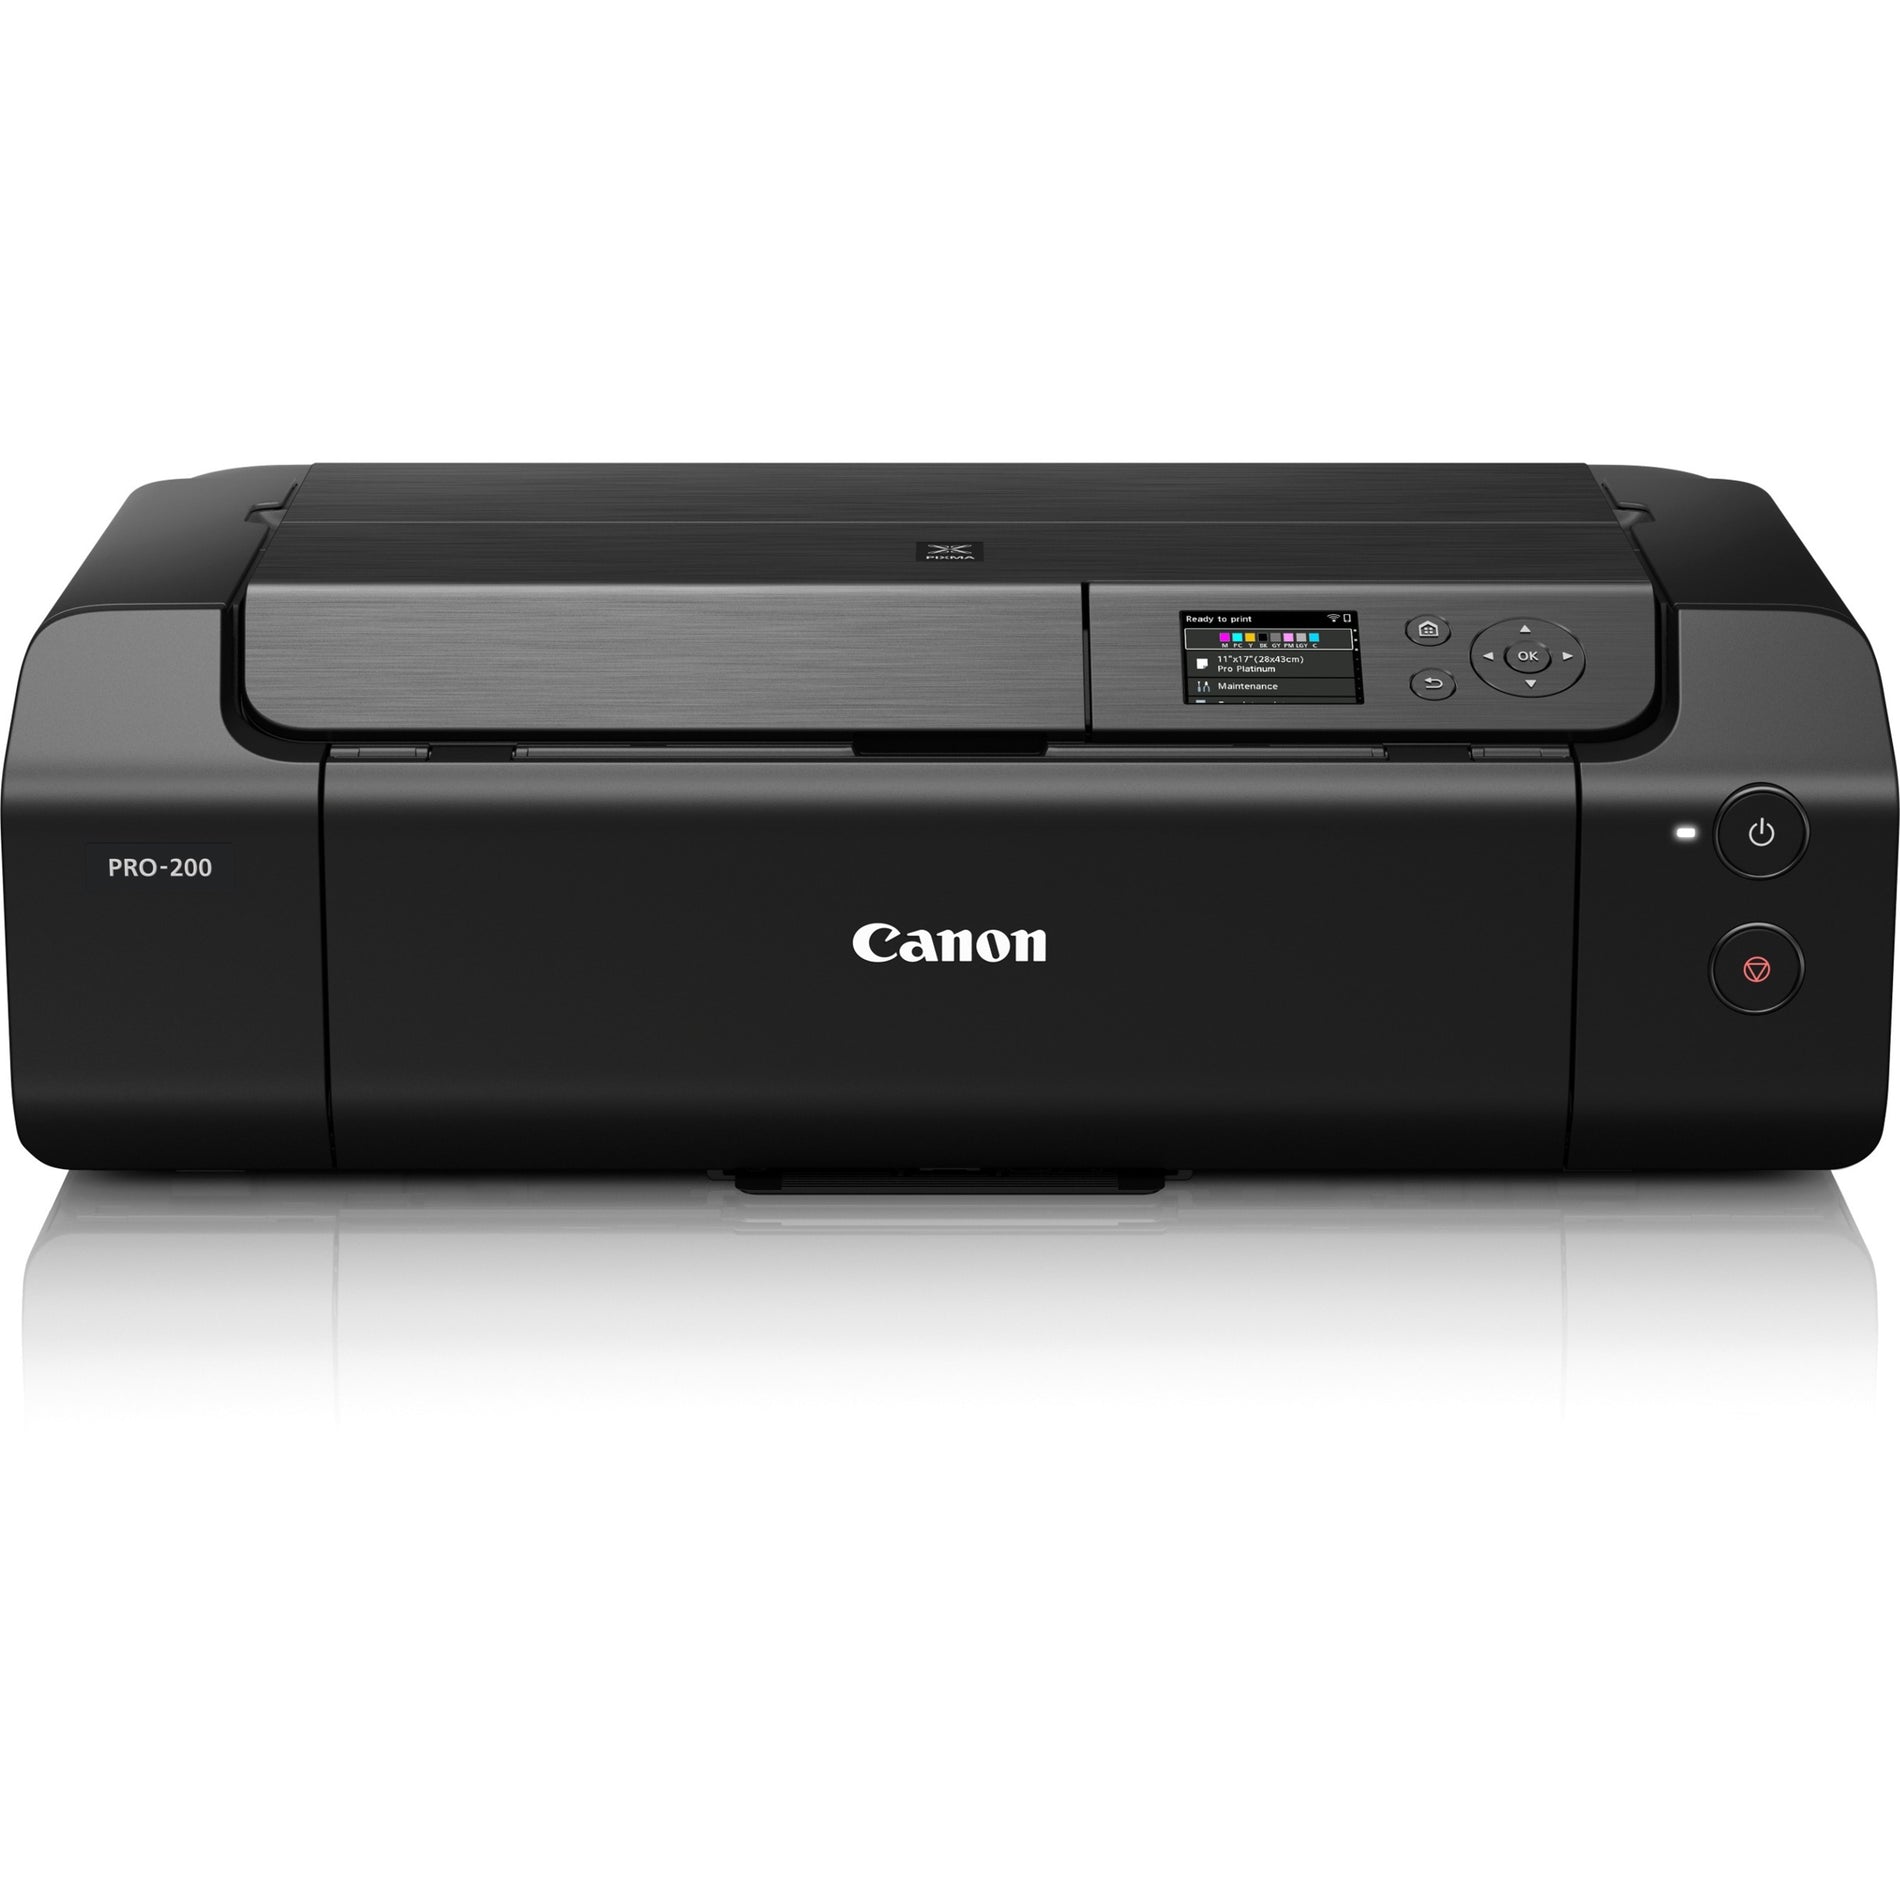 Canon 4280C002 PIXMA PRO-200 Inkjet Printer, Wireless Color Photo Printer with 4800 x 2400 dpi